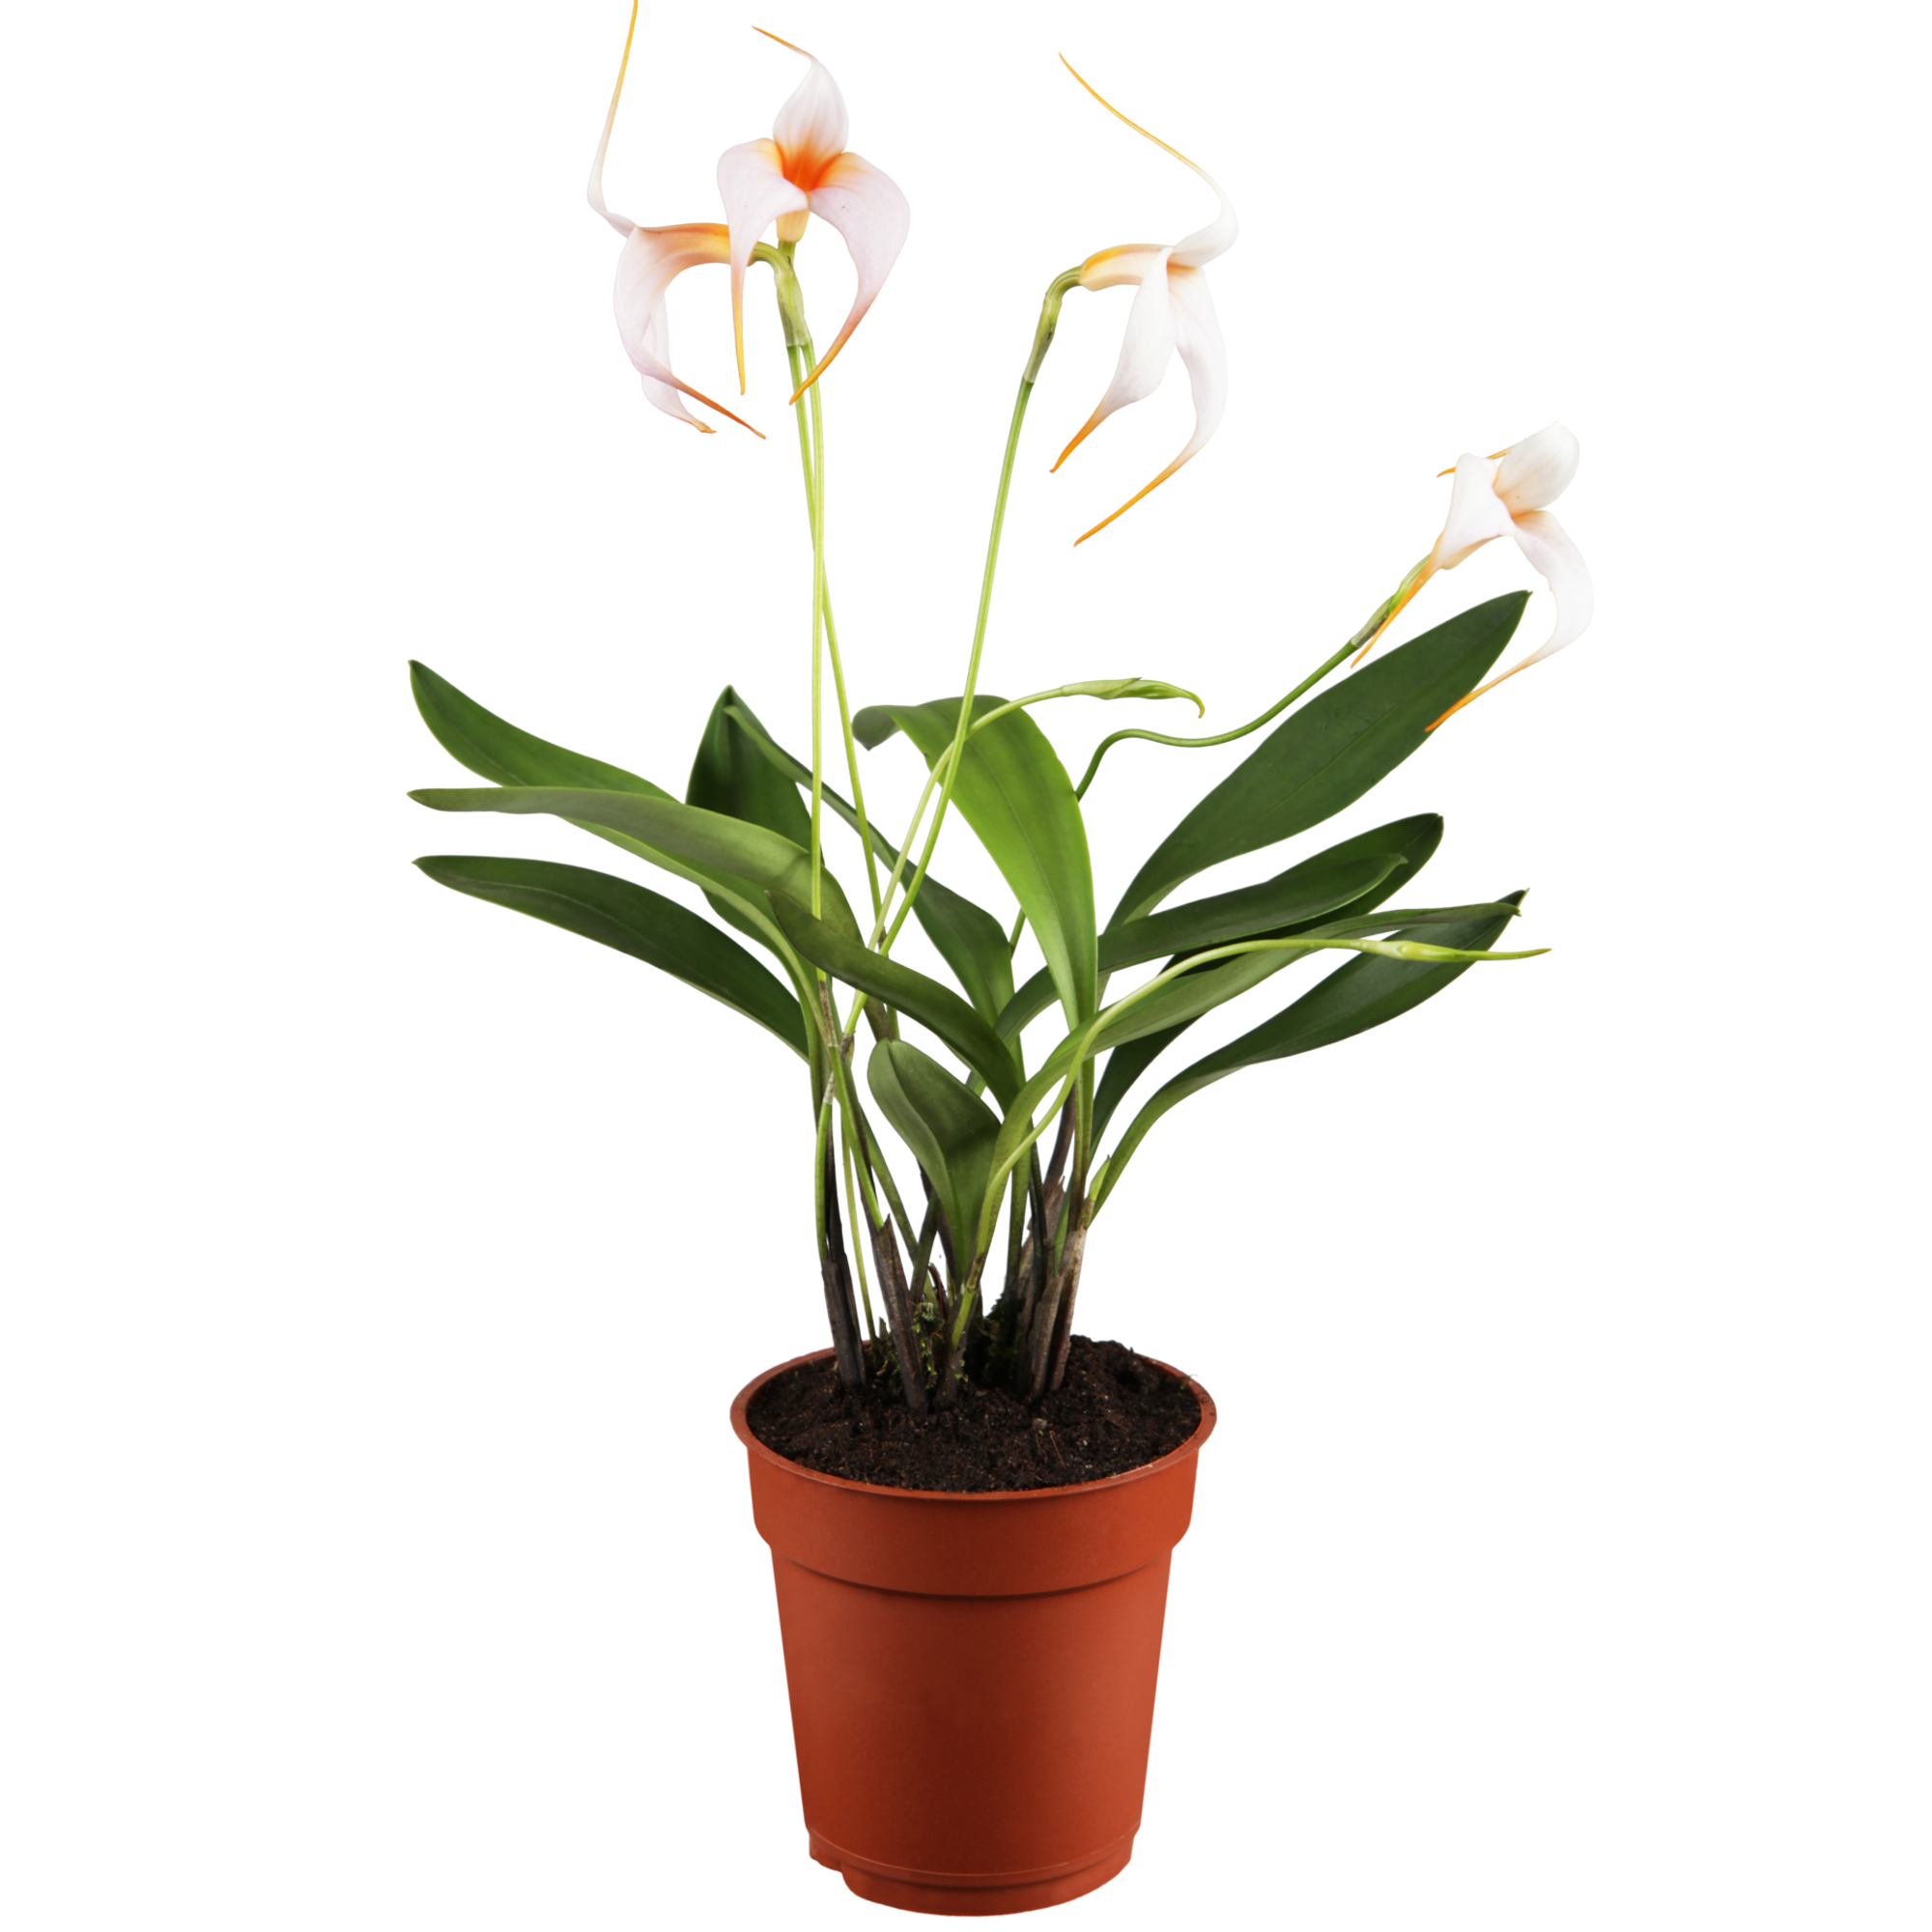 Masdevallia-Orchidee 4 Rispen weiß, 9 cm Topf + product picture